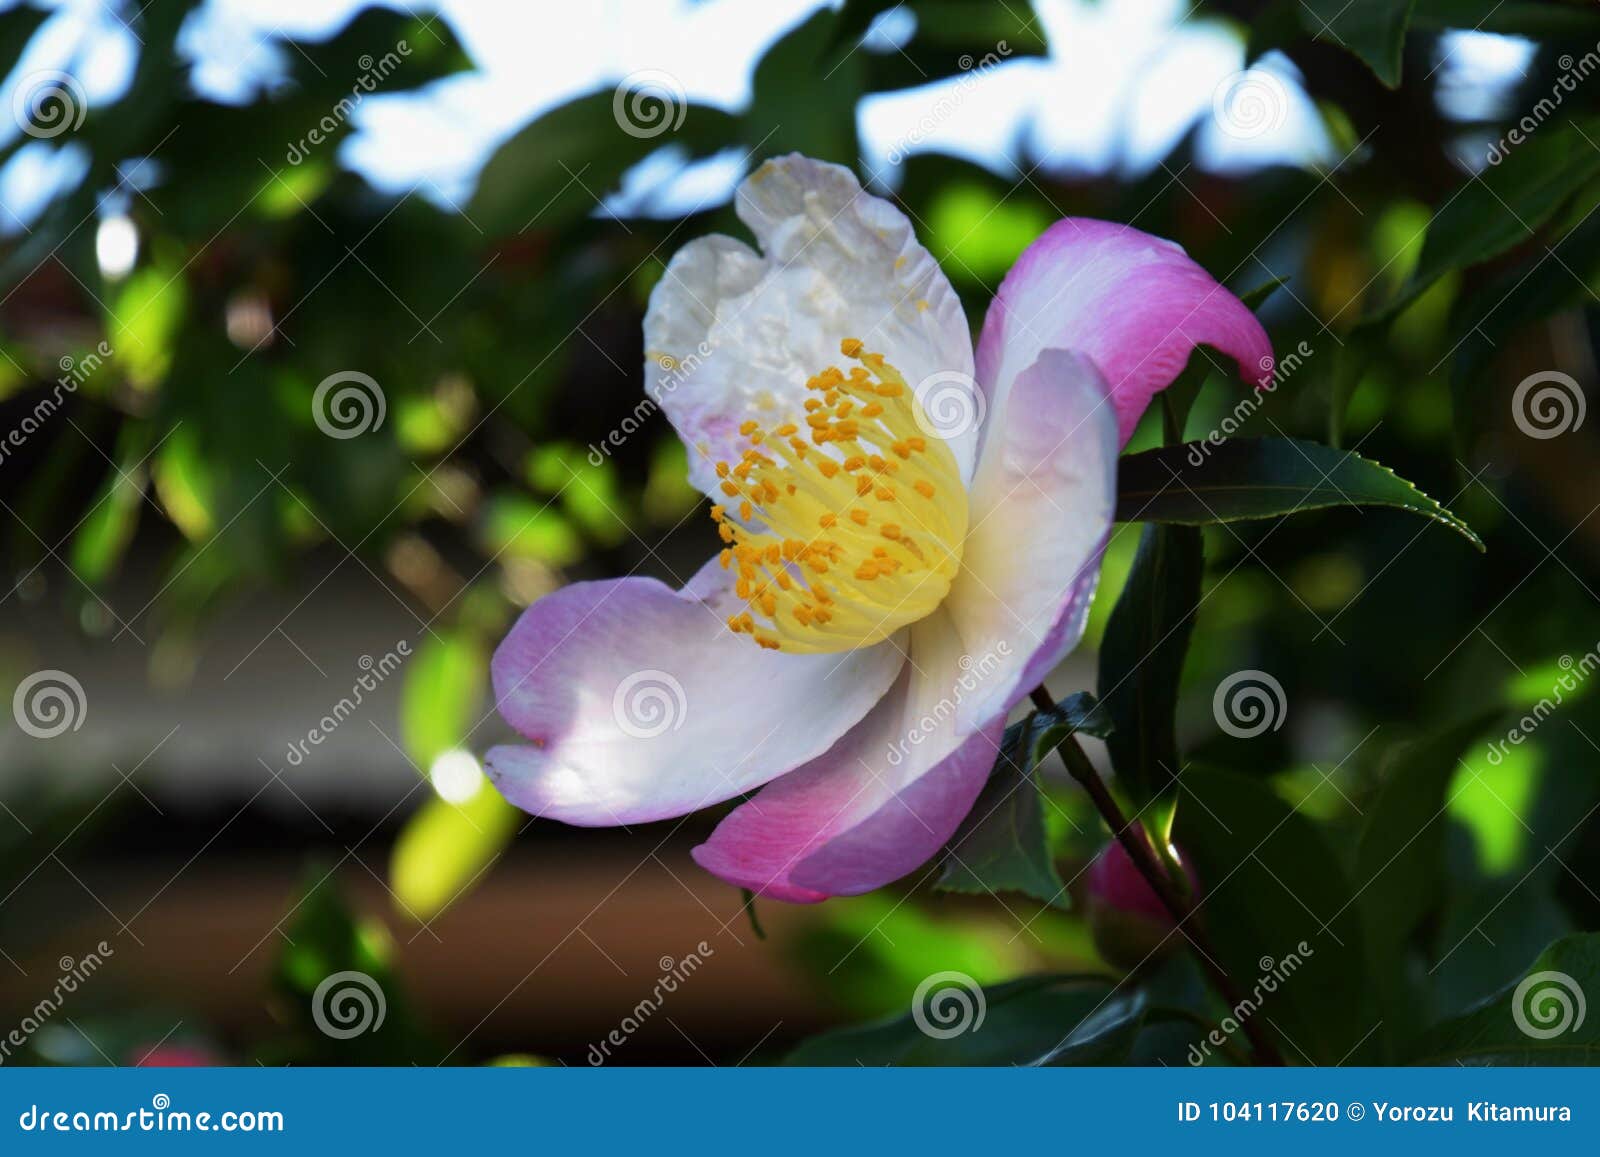 Sasanqua stock photo. Image of sasanqua, pink, flower - 104117620